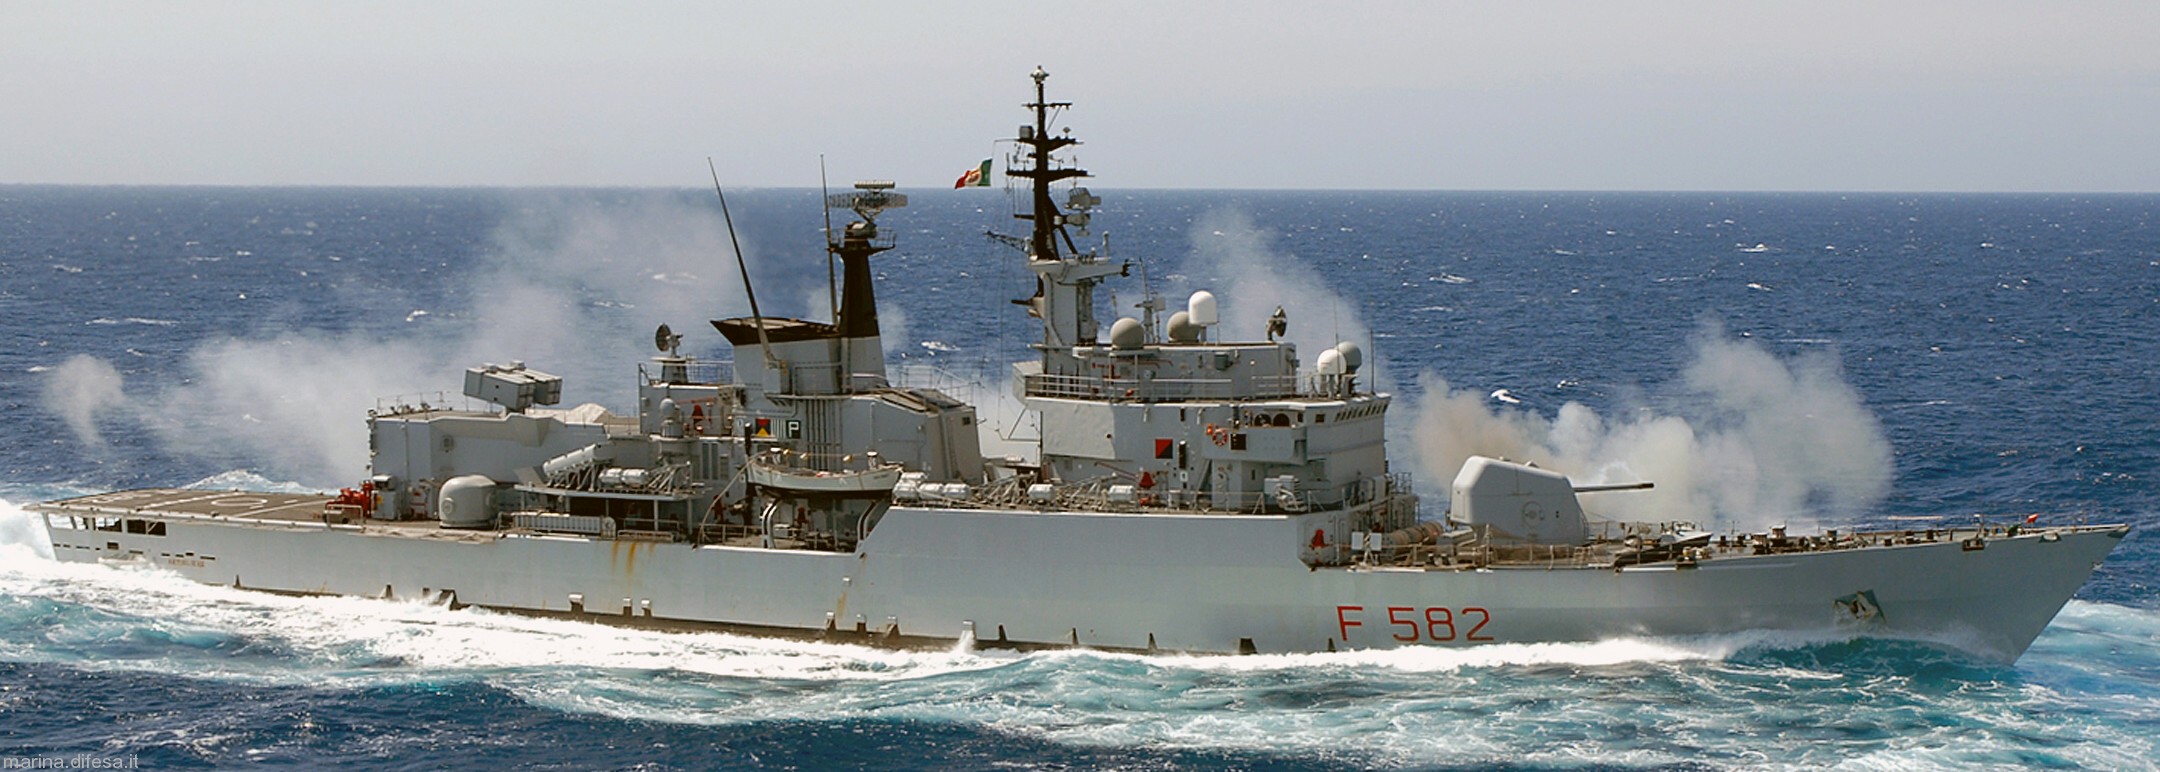 f-582 artigliere nave its soldati class frigate italian navy marina militare 02